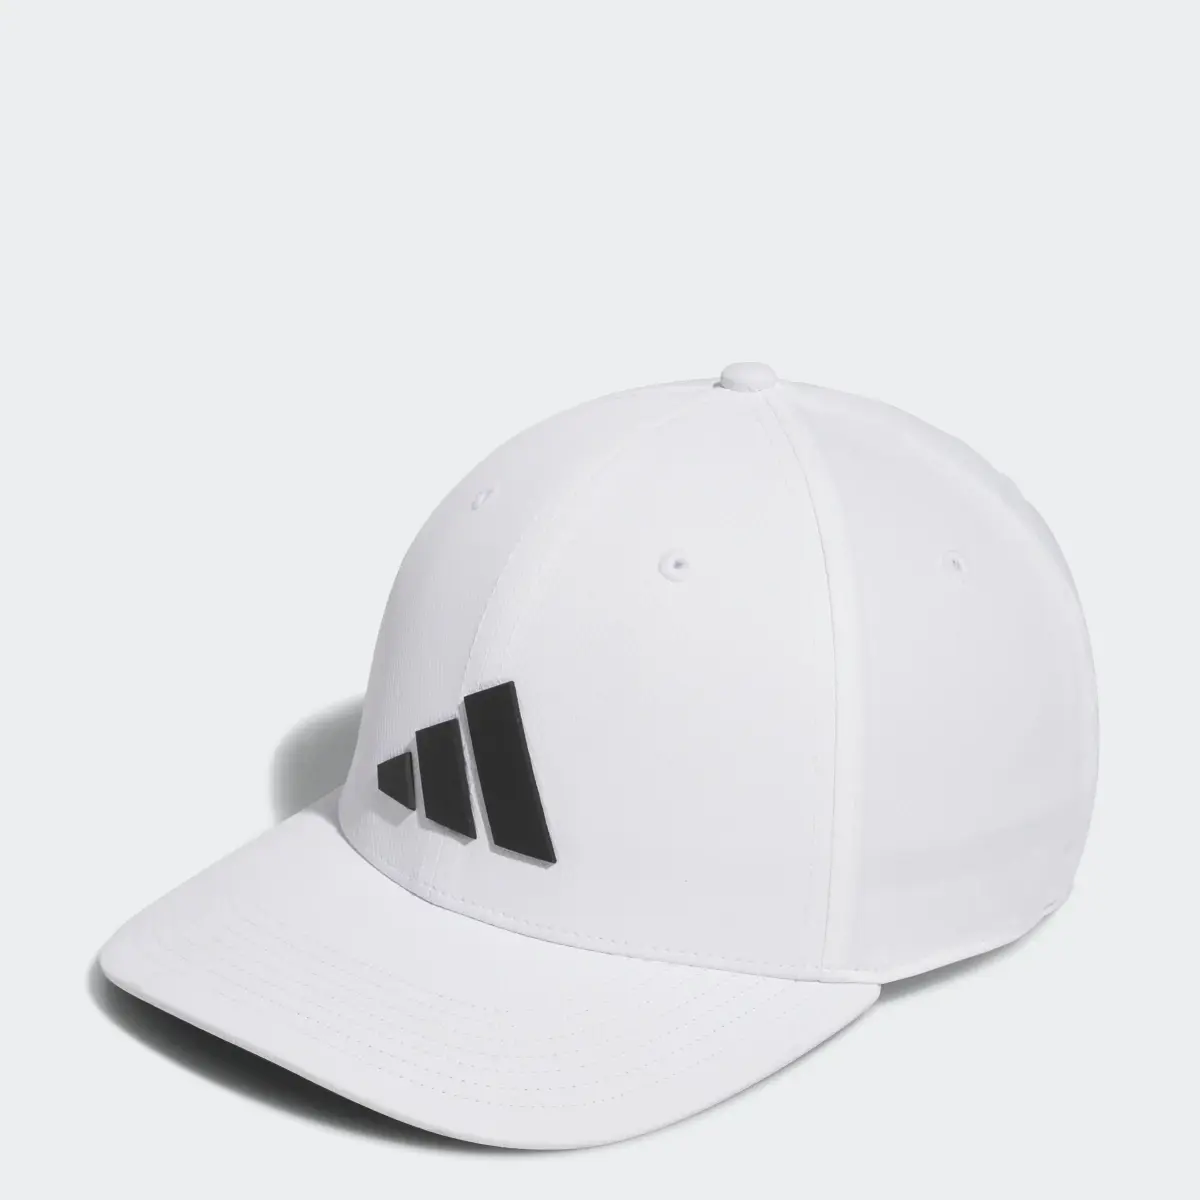 Adidas Tour Snapback Hat. 1